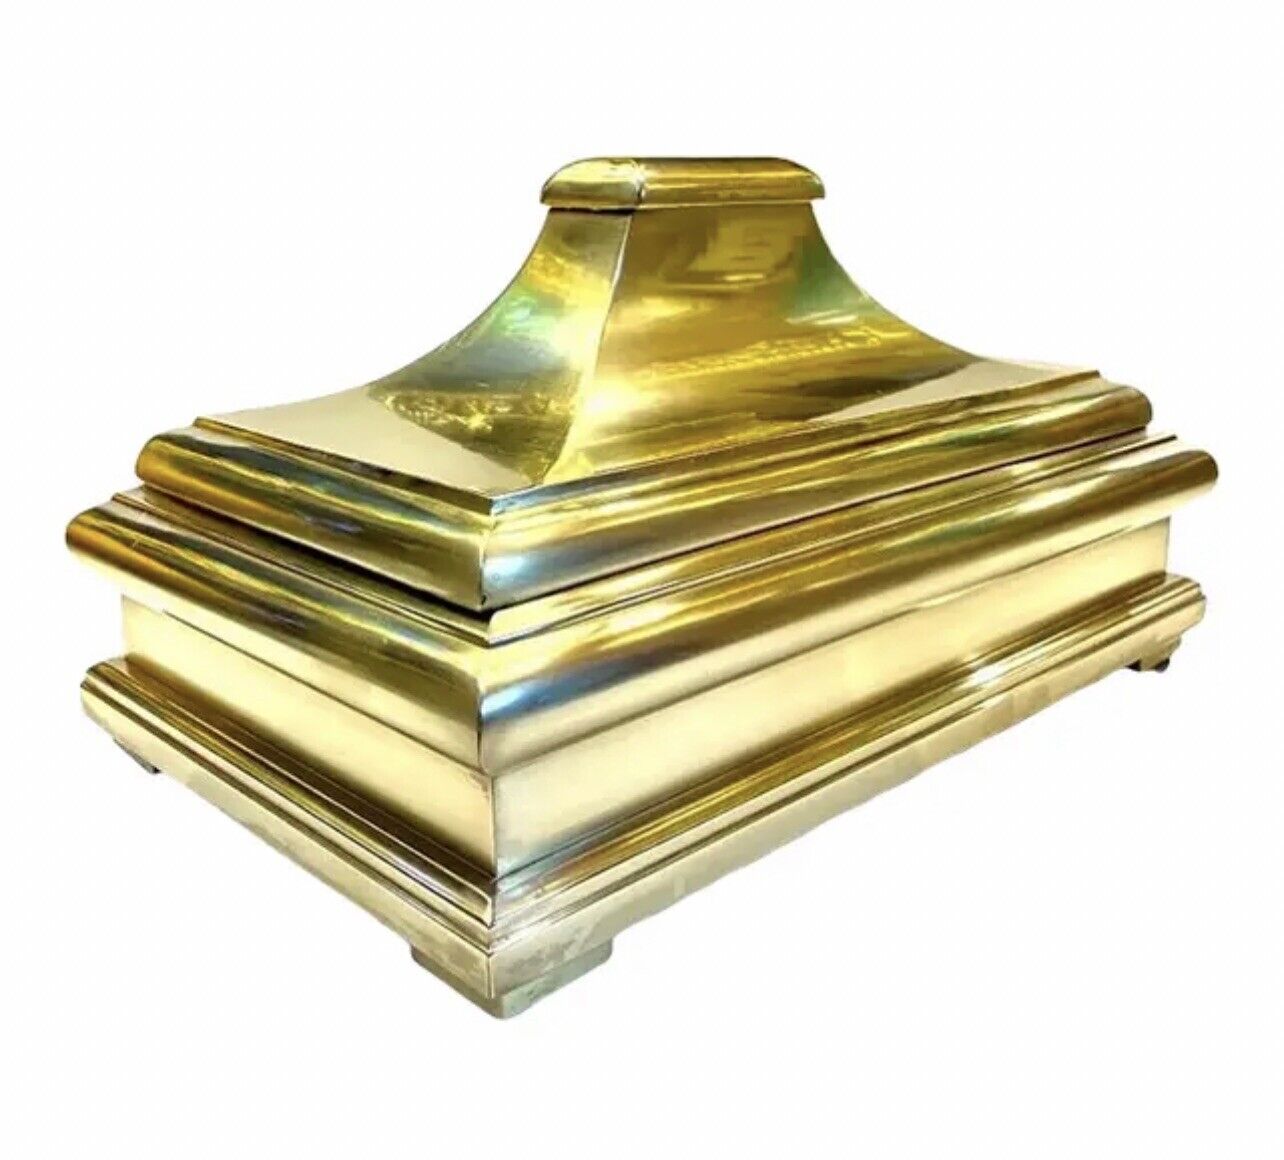 Fabulous Chapman Lamp Co. Solid Brass Decorative Orientalist Pagoda Box c.1978